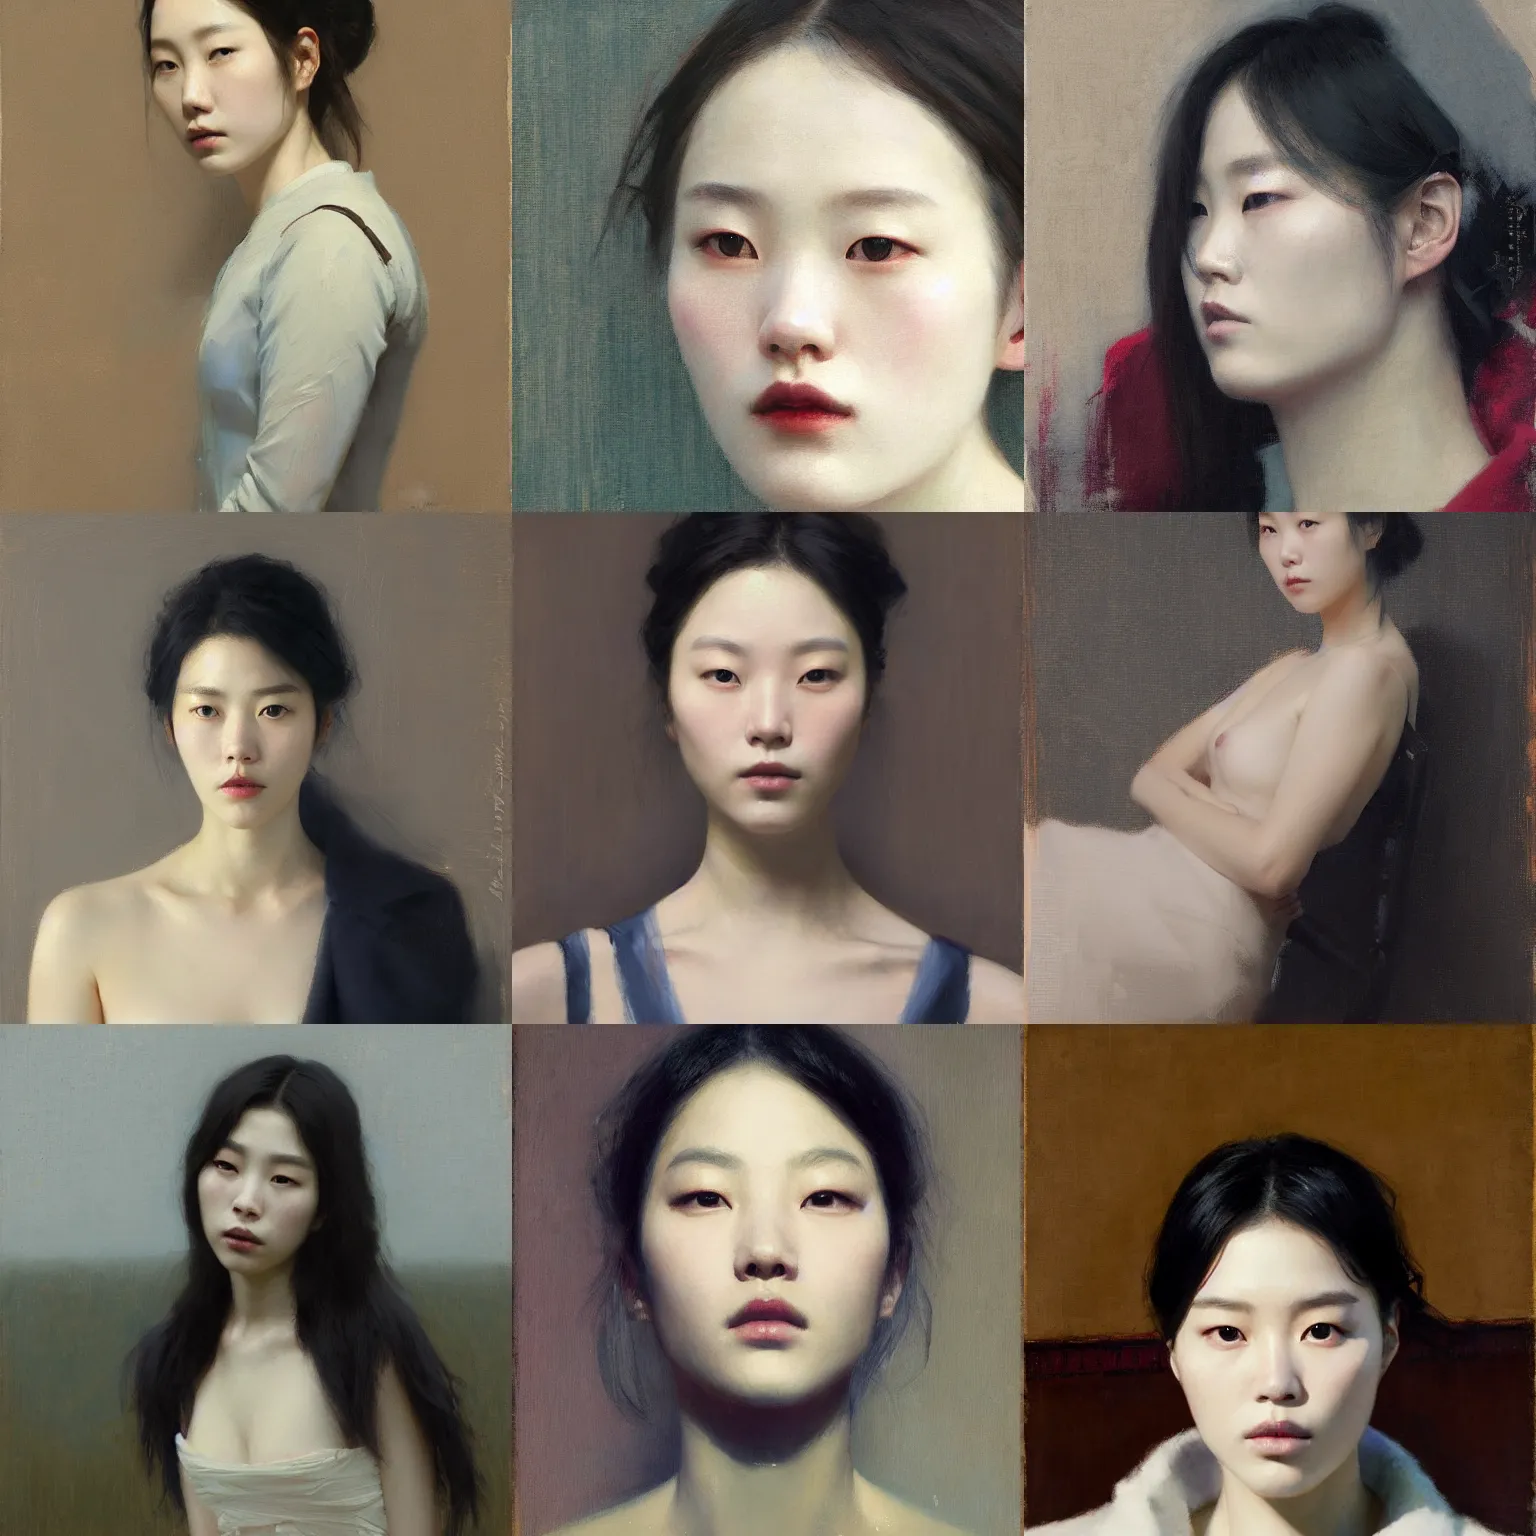 Prompt: lee jin - eun by jeremy lipkin, rule of thirds, seductive look, beautiful